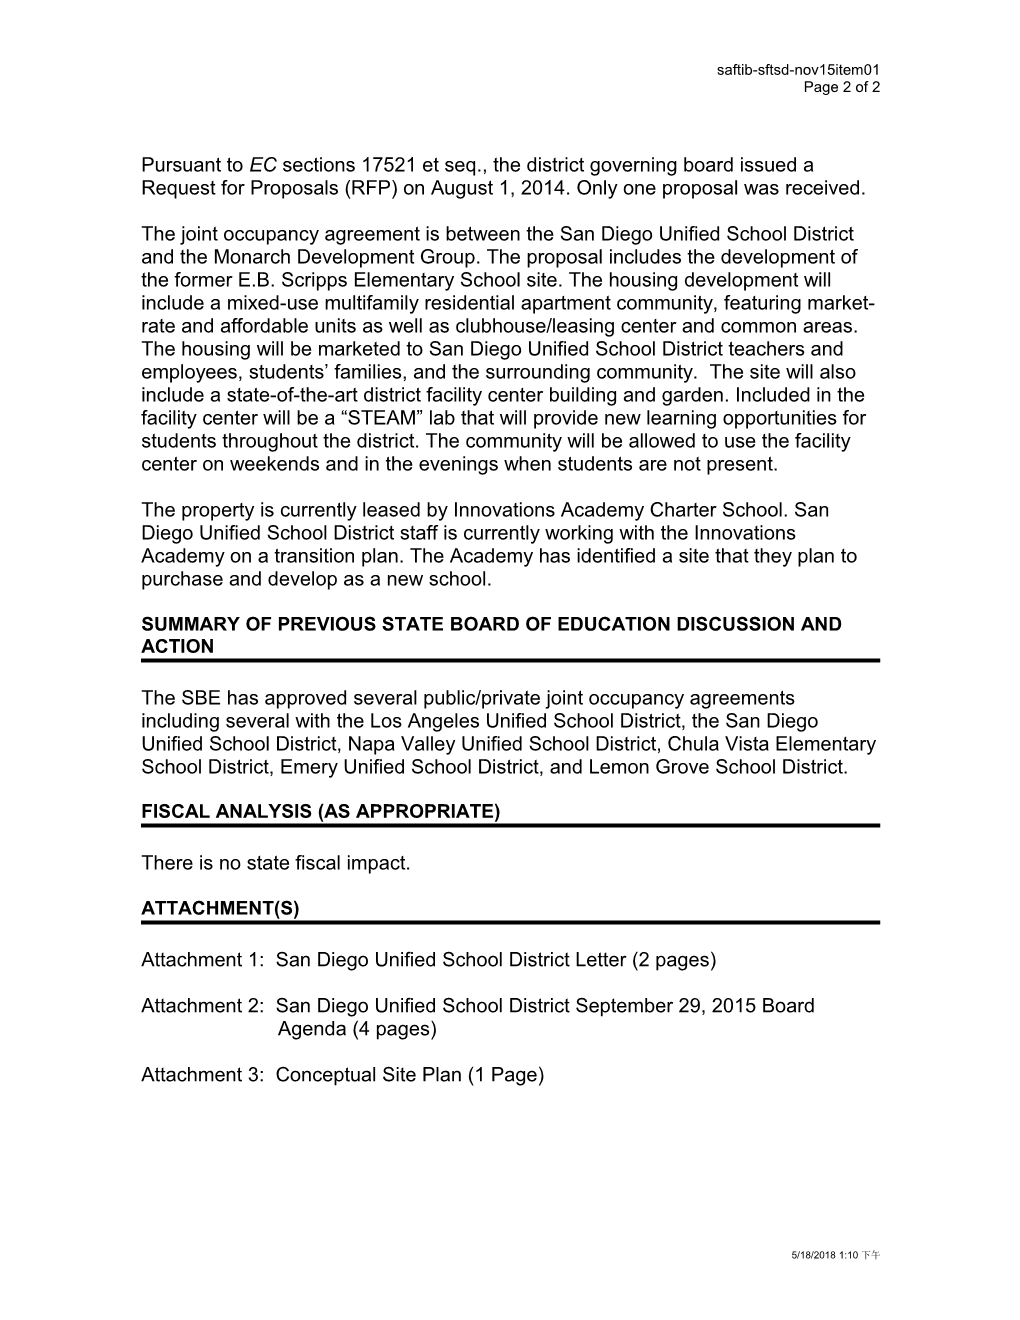 November 2015 Agenda Item 13 - Meeting Agendas (CA State Board of Education)